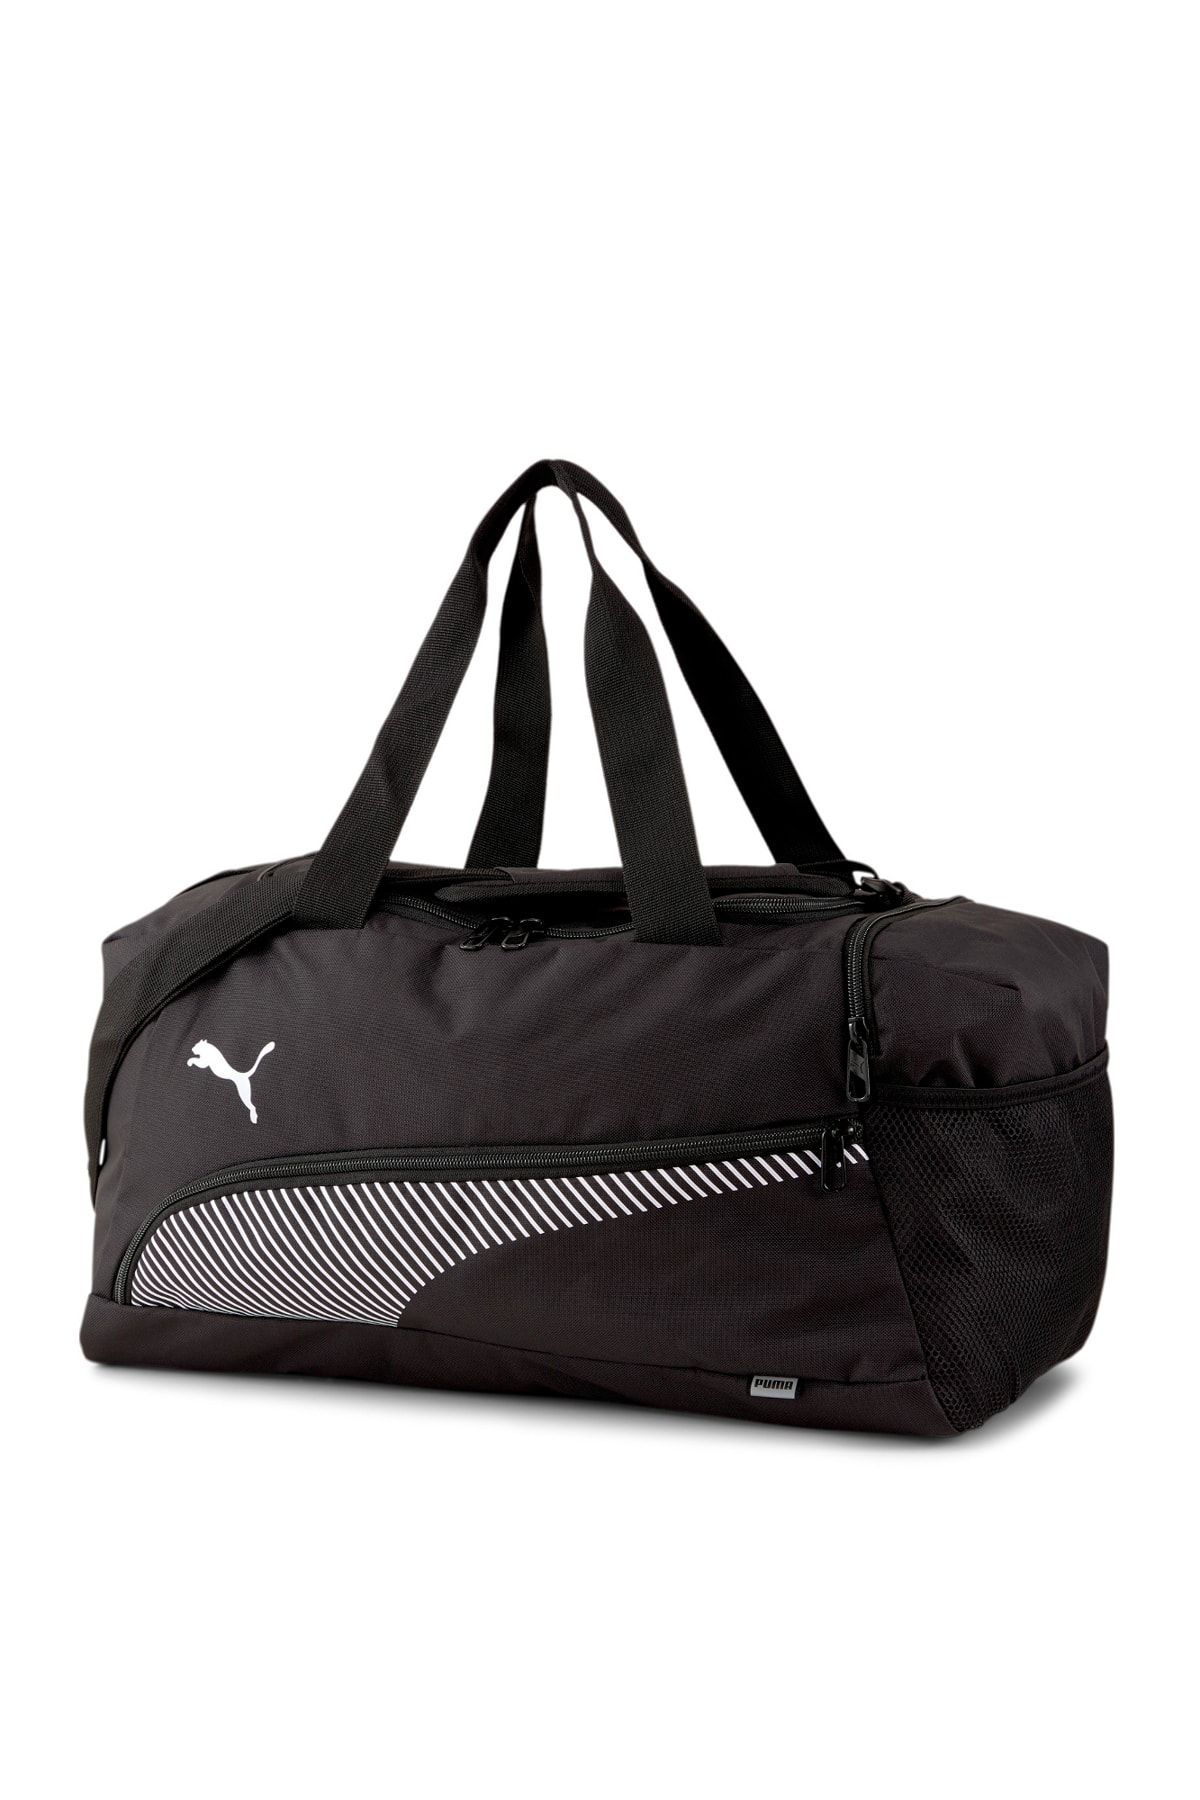 Puma Unisex Siyah Spor Çantası - Fundamentals Sports Bag S  - 07728901